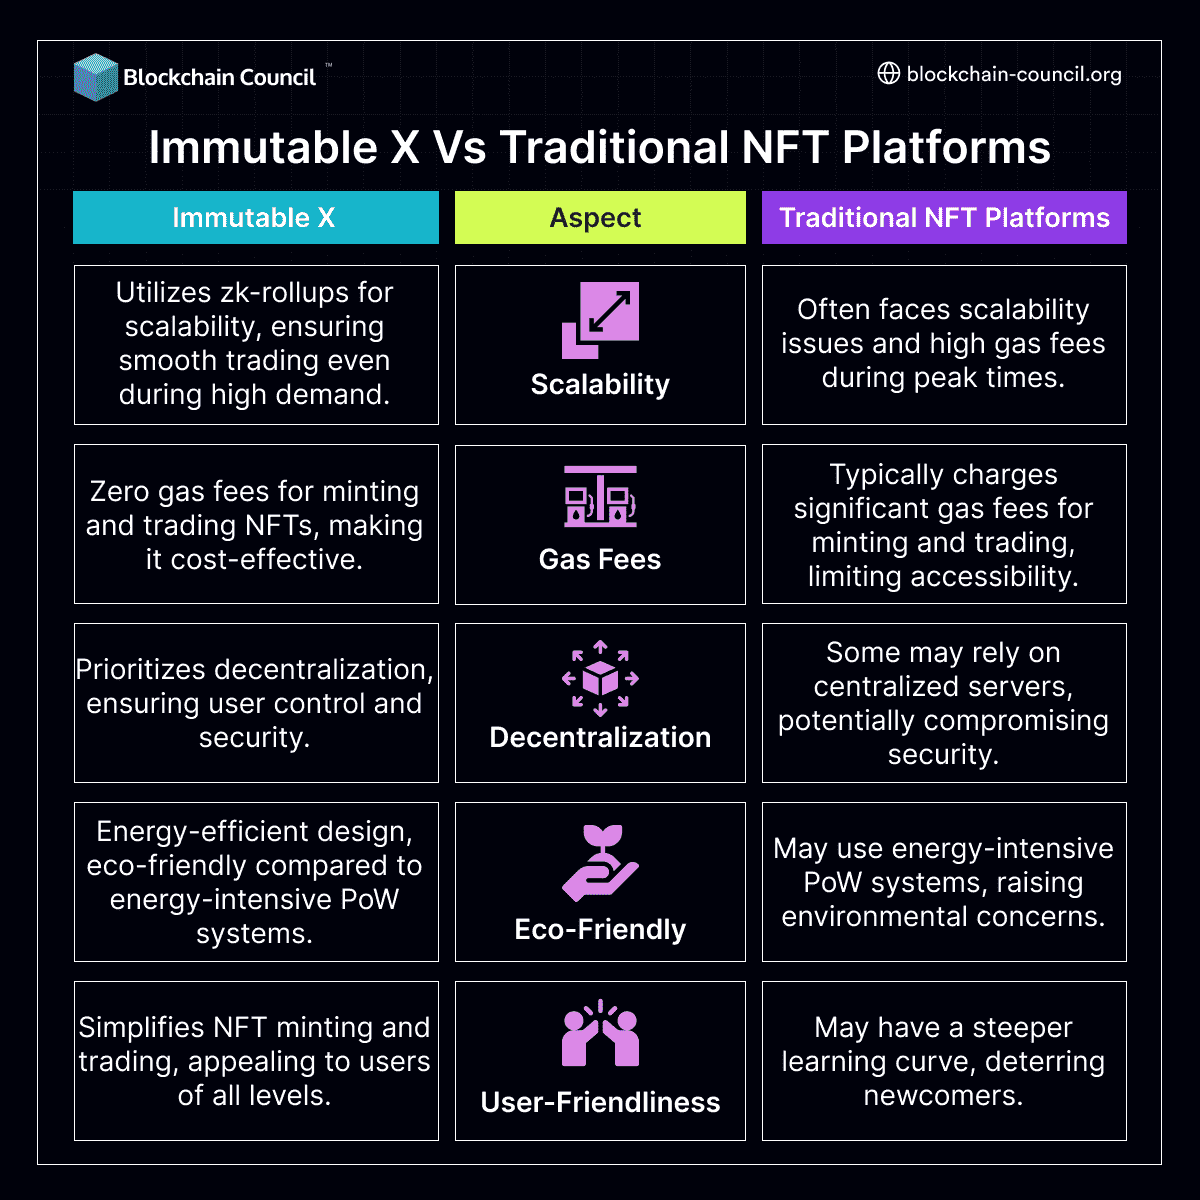 Immutable X vs. traditional NFT platforms